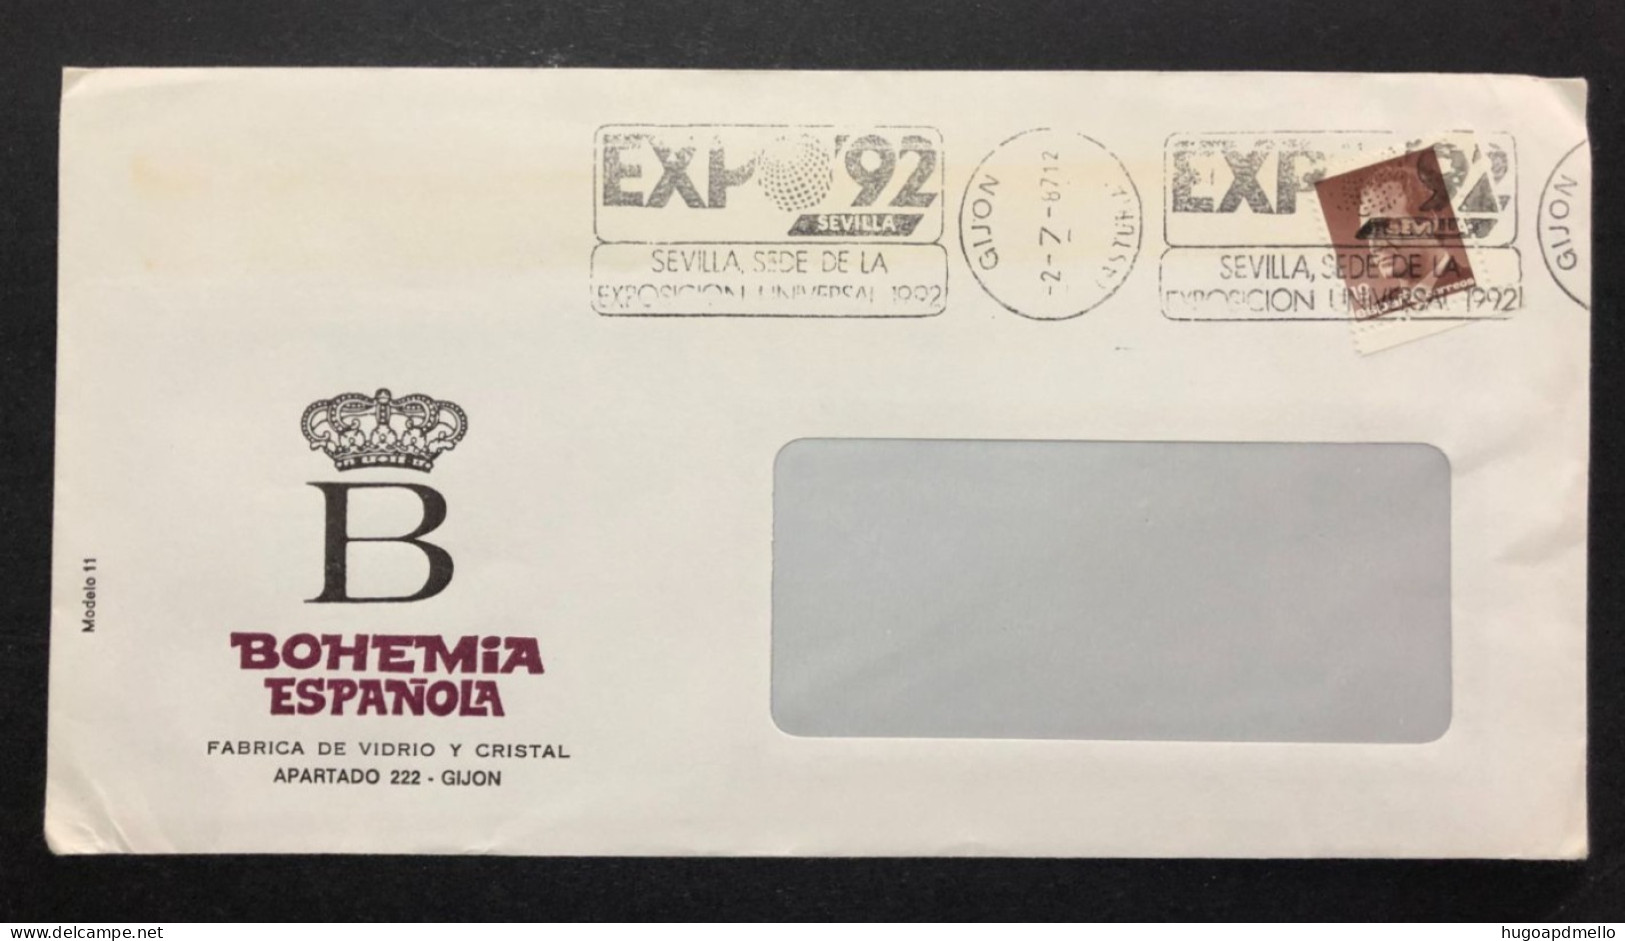 SPAIN, Cover With Special Cancellation « EXPO '92 », « GIJON Postmark », 1987 - 1992 – Sevilla (Spanje)